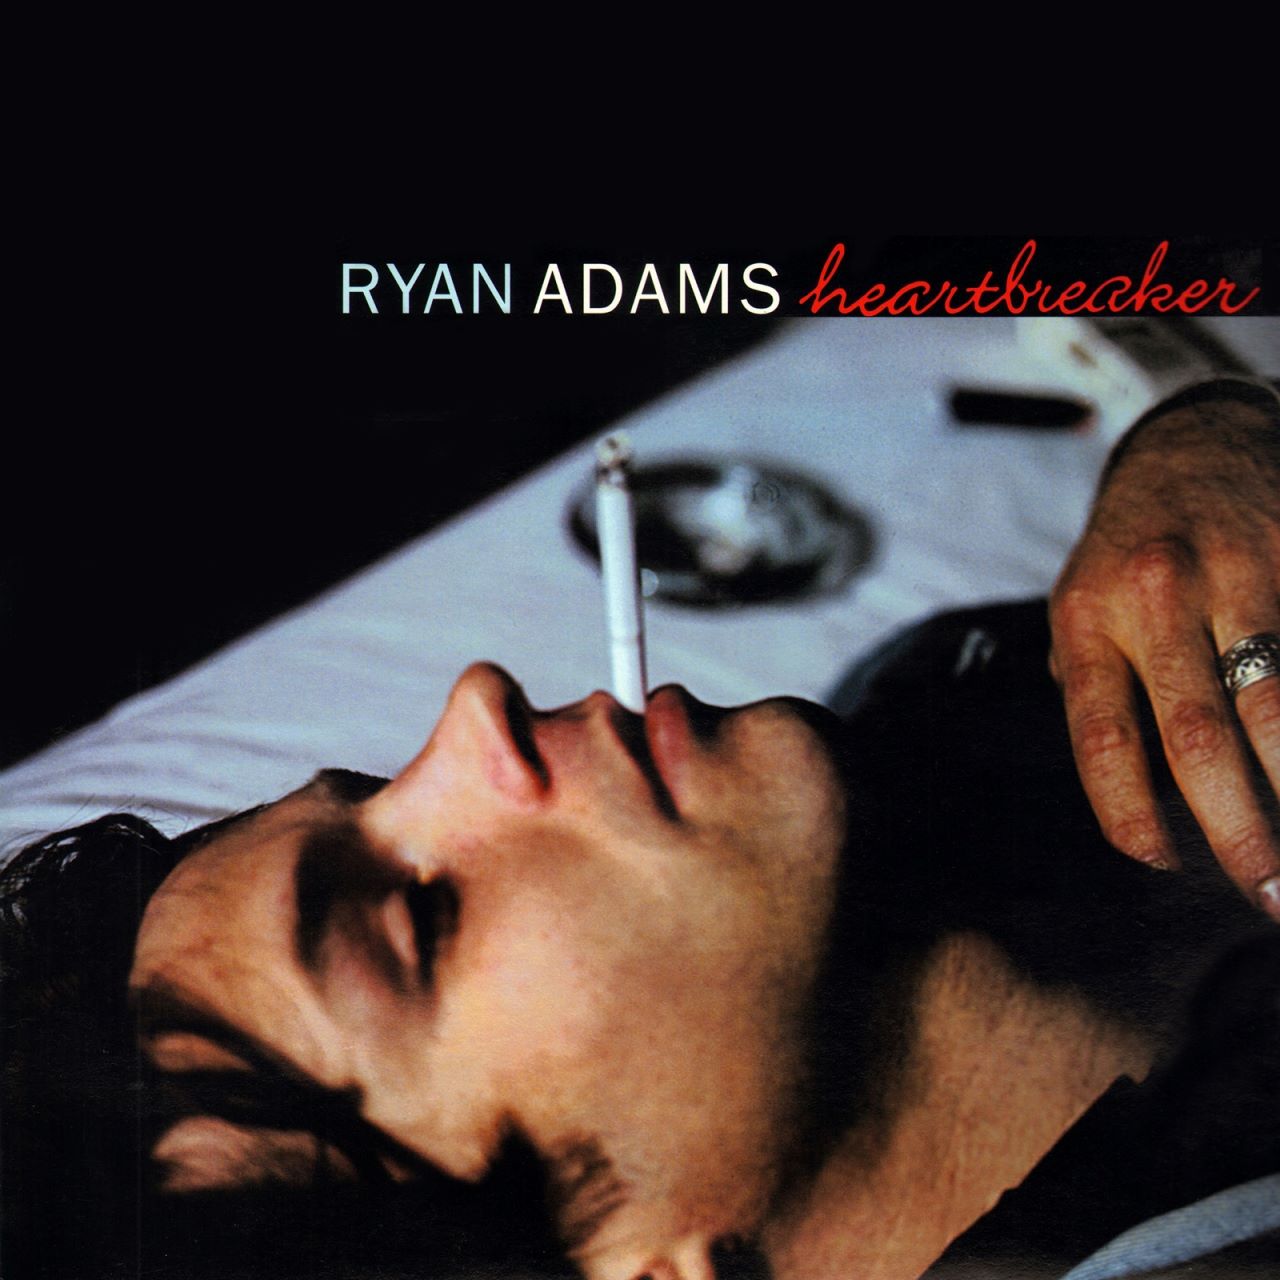 Ryan Adams - Heartbreaker cover album